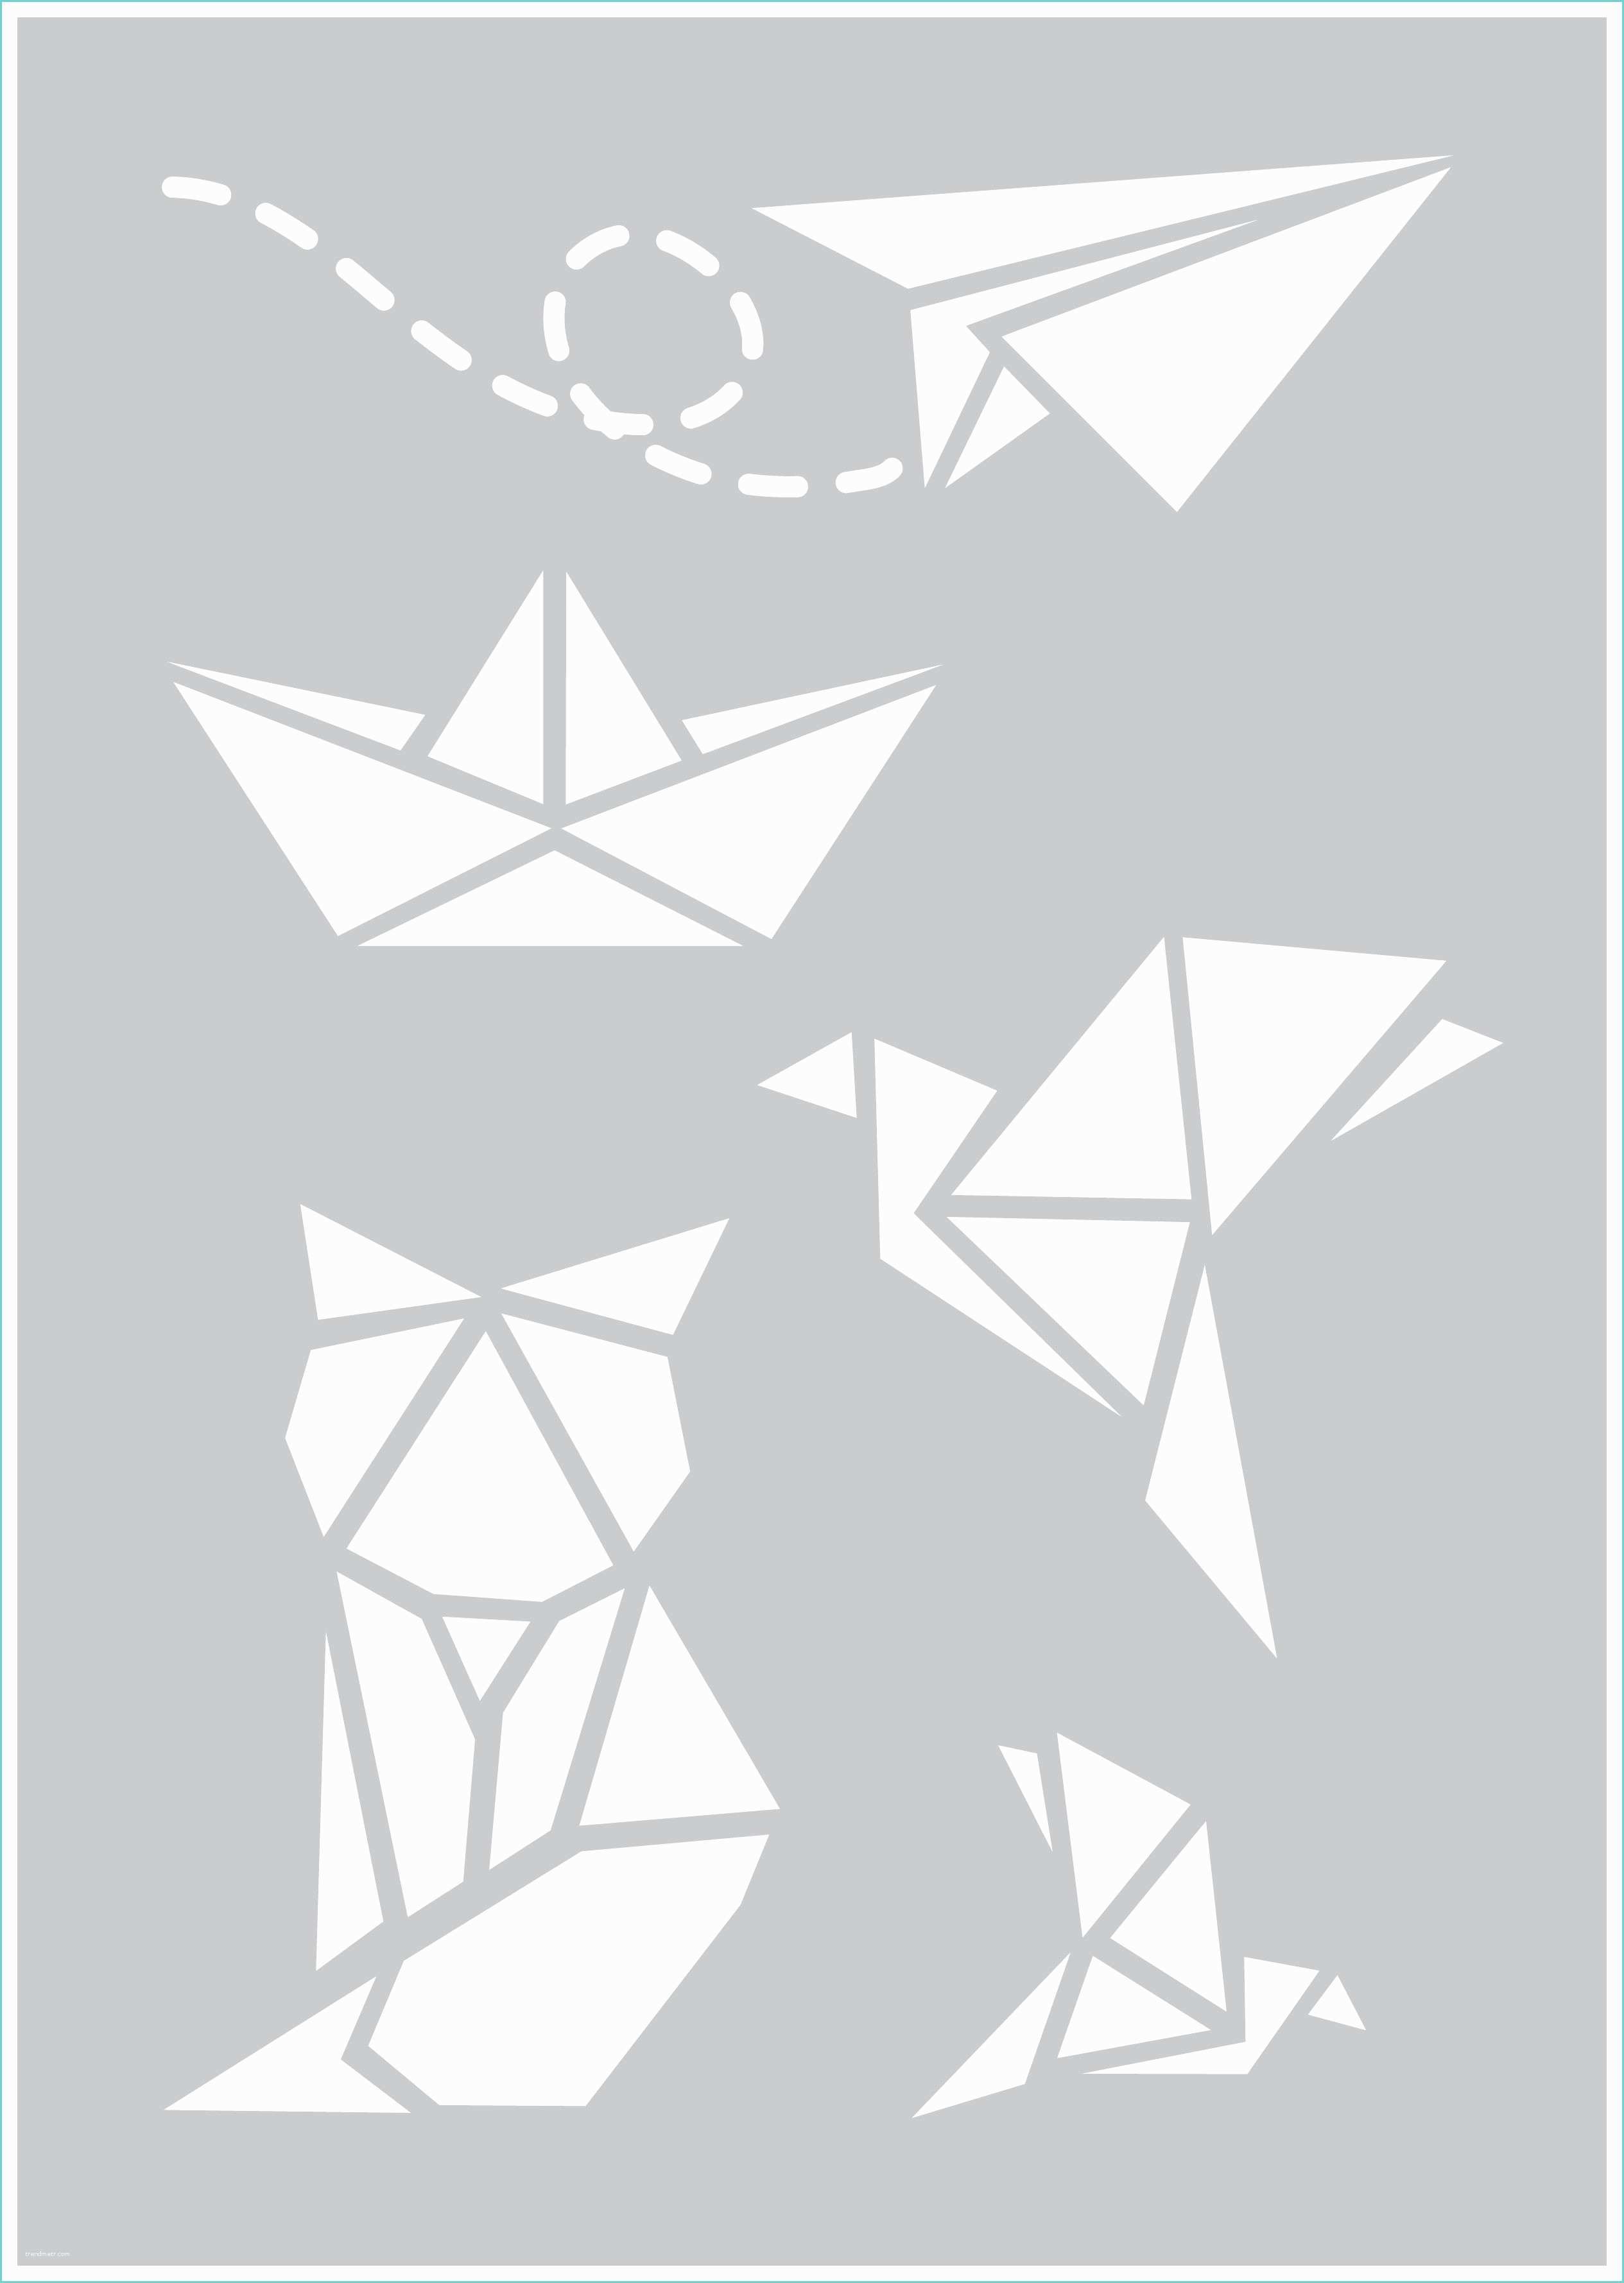 Dessin Pochoir A Imprimer Gratuit Pochoir Adhésif origami Pochoir Répositionnable